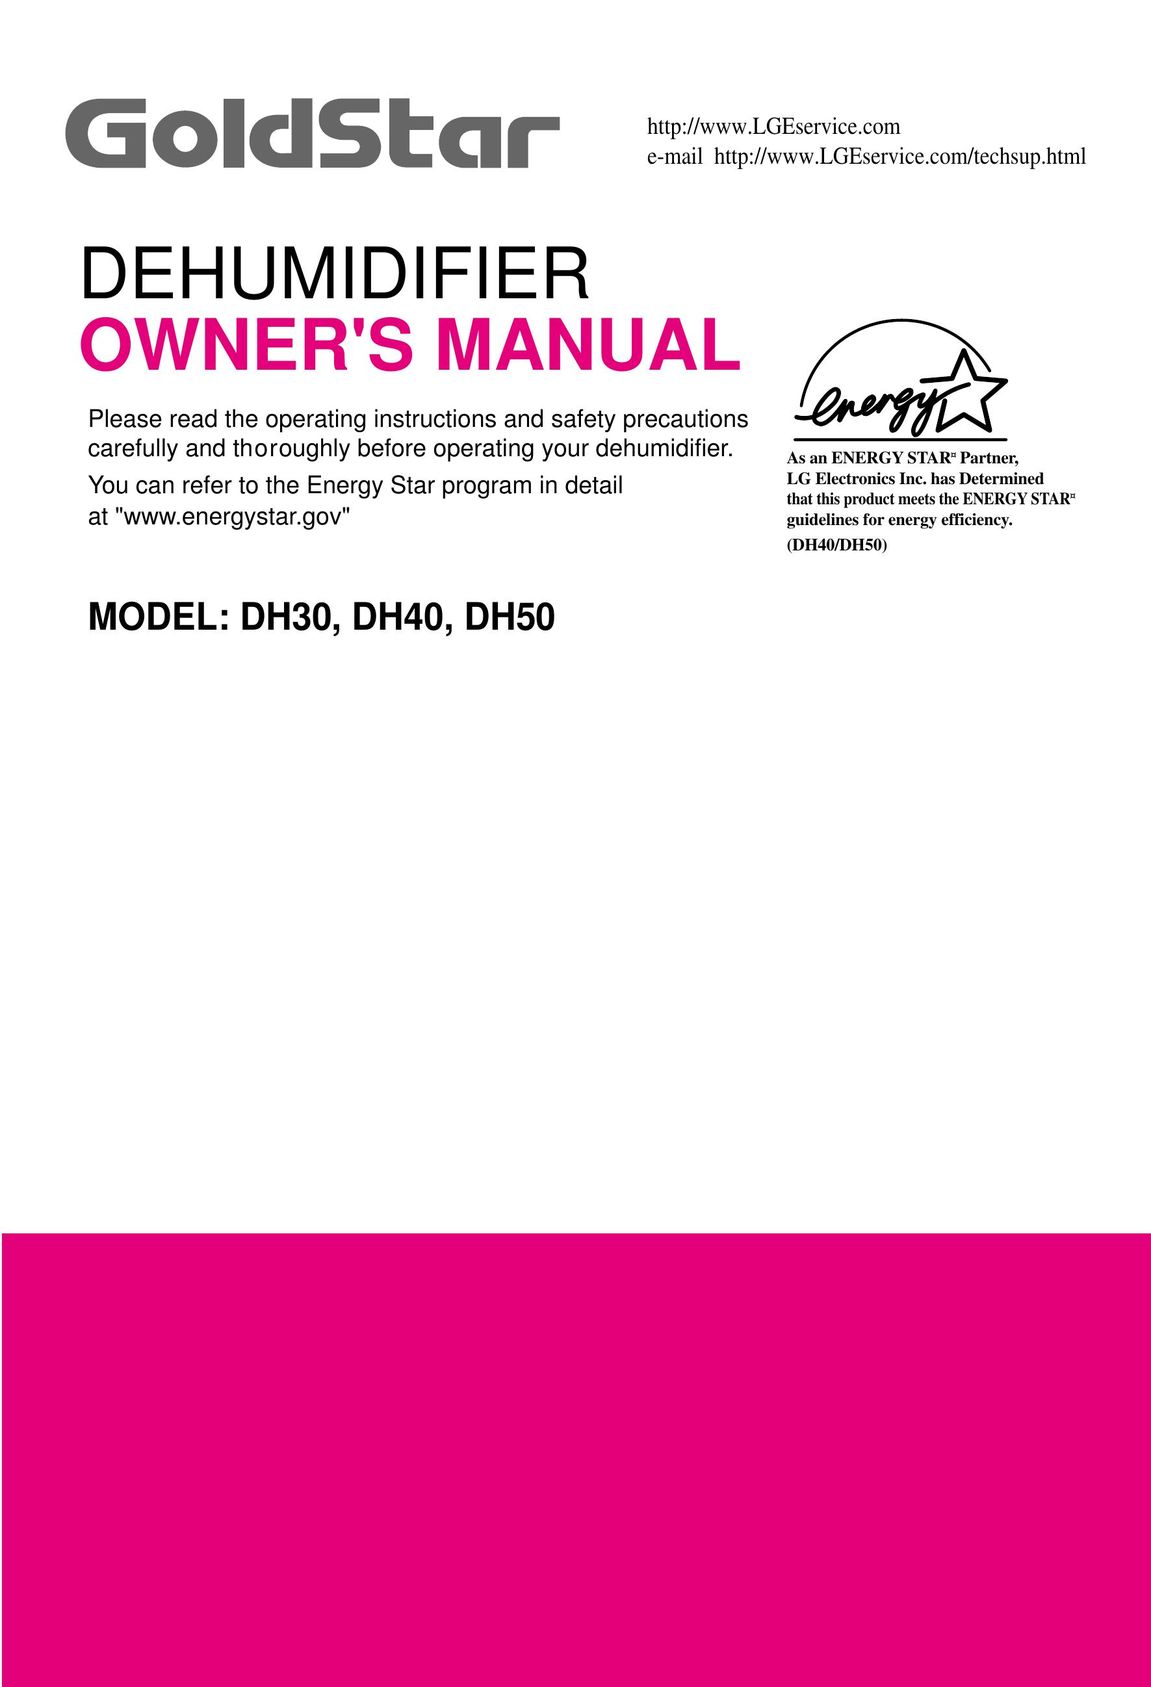 Goldstar DH30 Dehumidifier User Manual